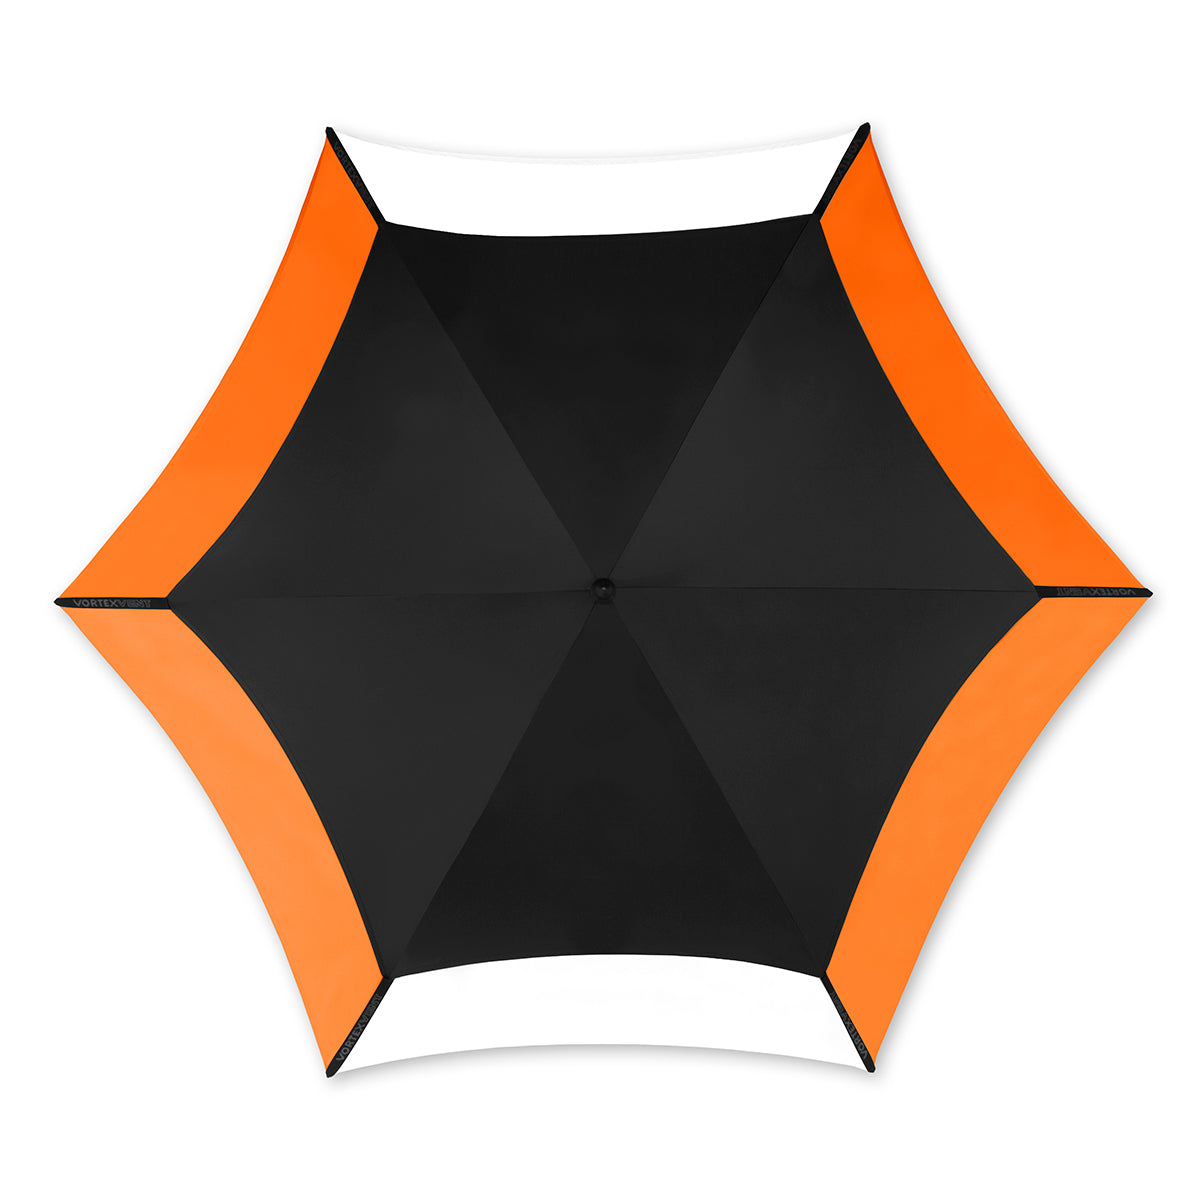 Vortex Vent 62″ Golf Umbrella